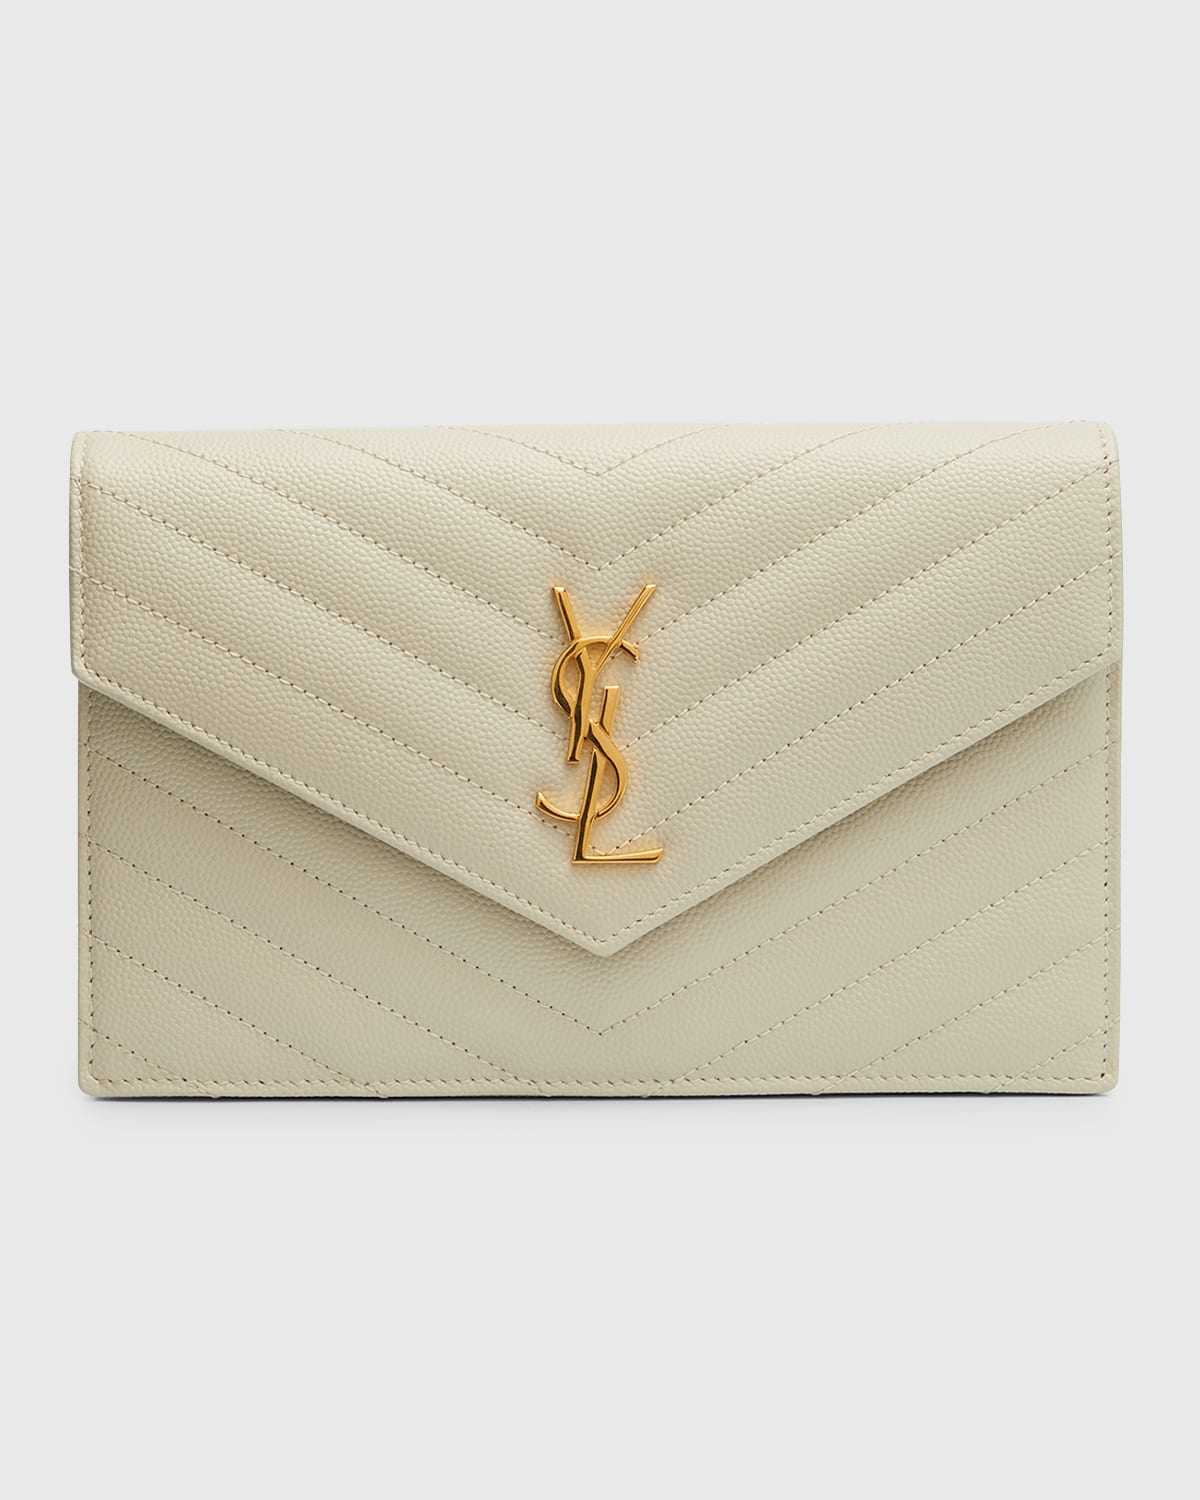 Saint Laurent Beige Leather Monogram Envelope Wallet-On-Chain